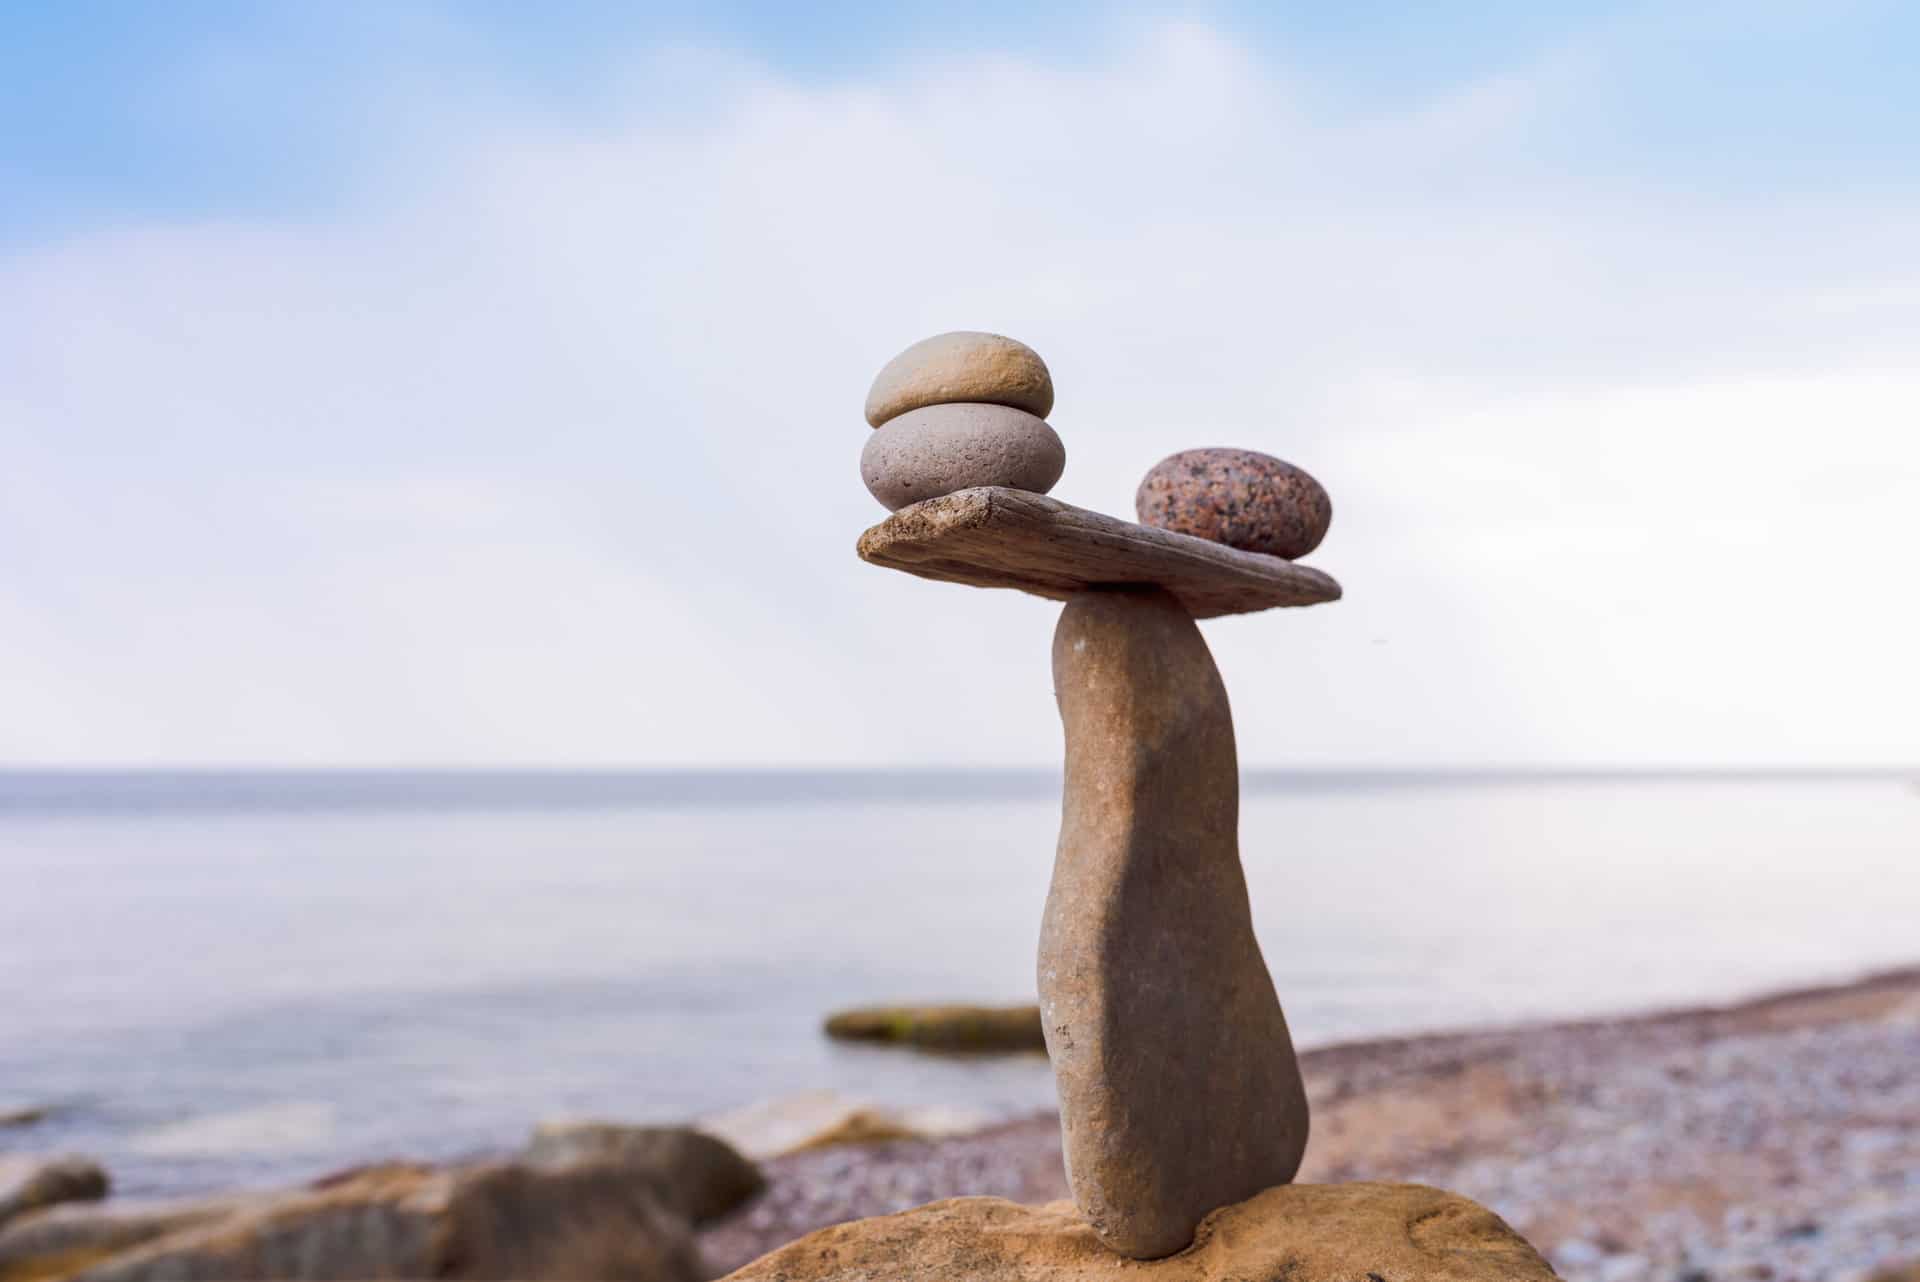 Balancing,Of,Pebbles,On,The,Seashore